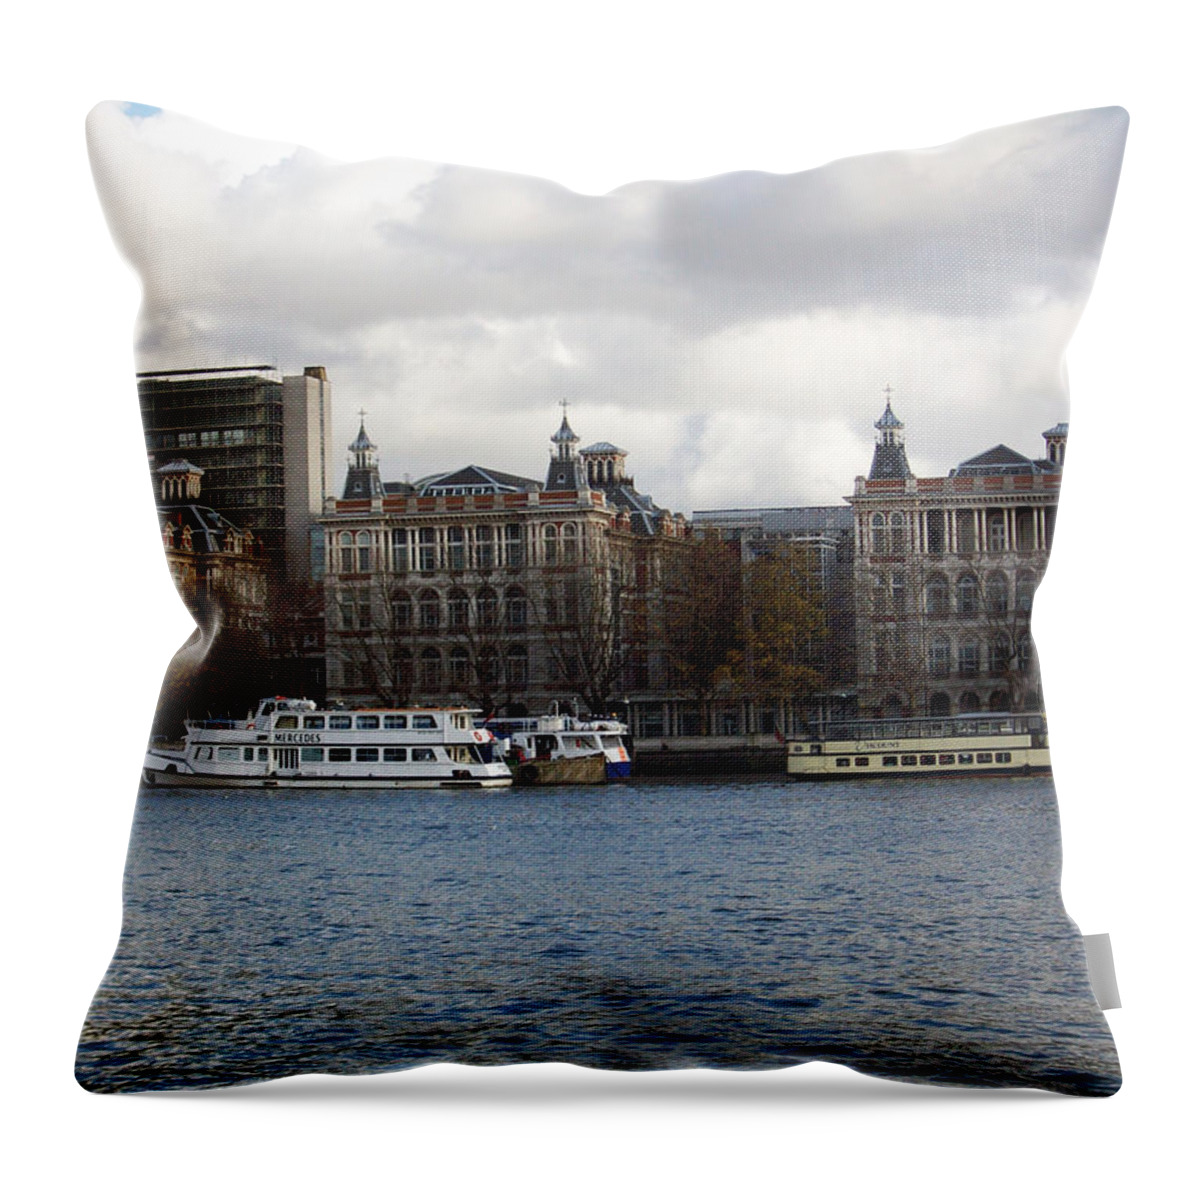 London Throw Pillow featuring the photograph London Eye by Munir Alawi